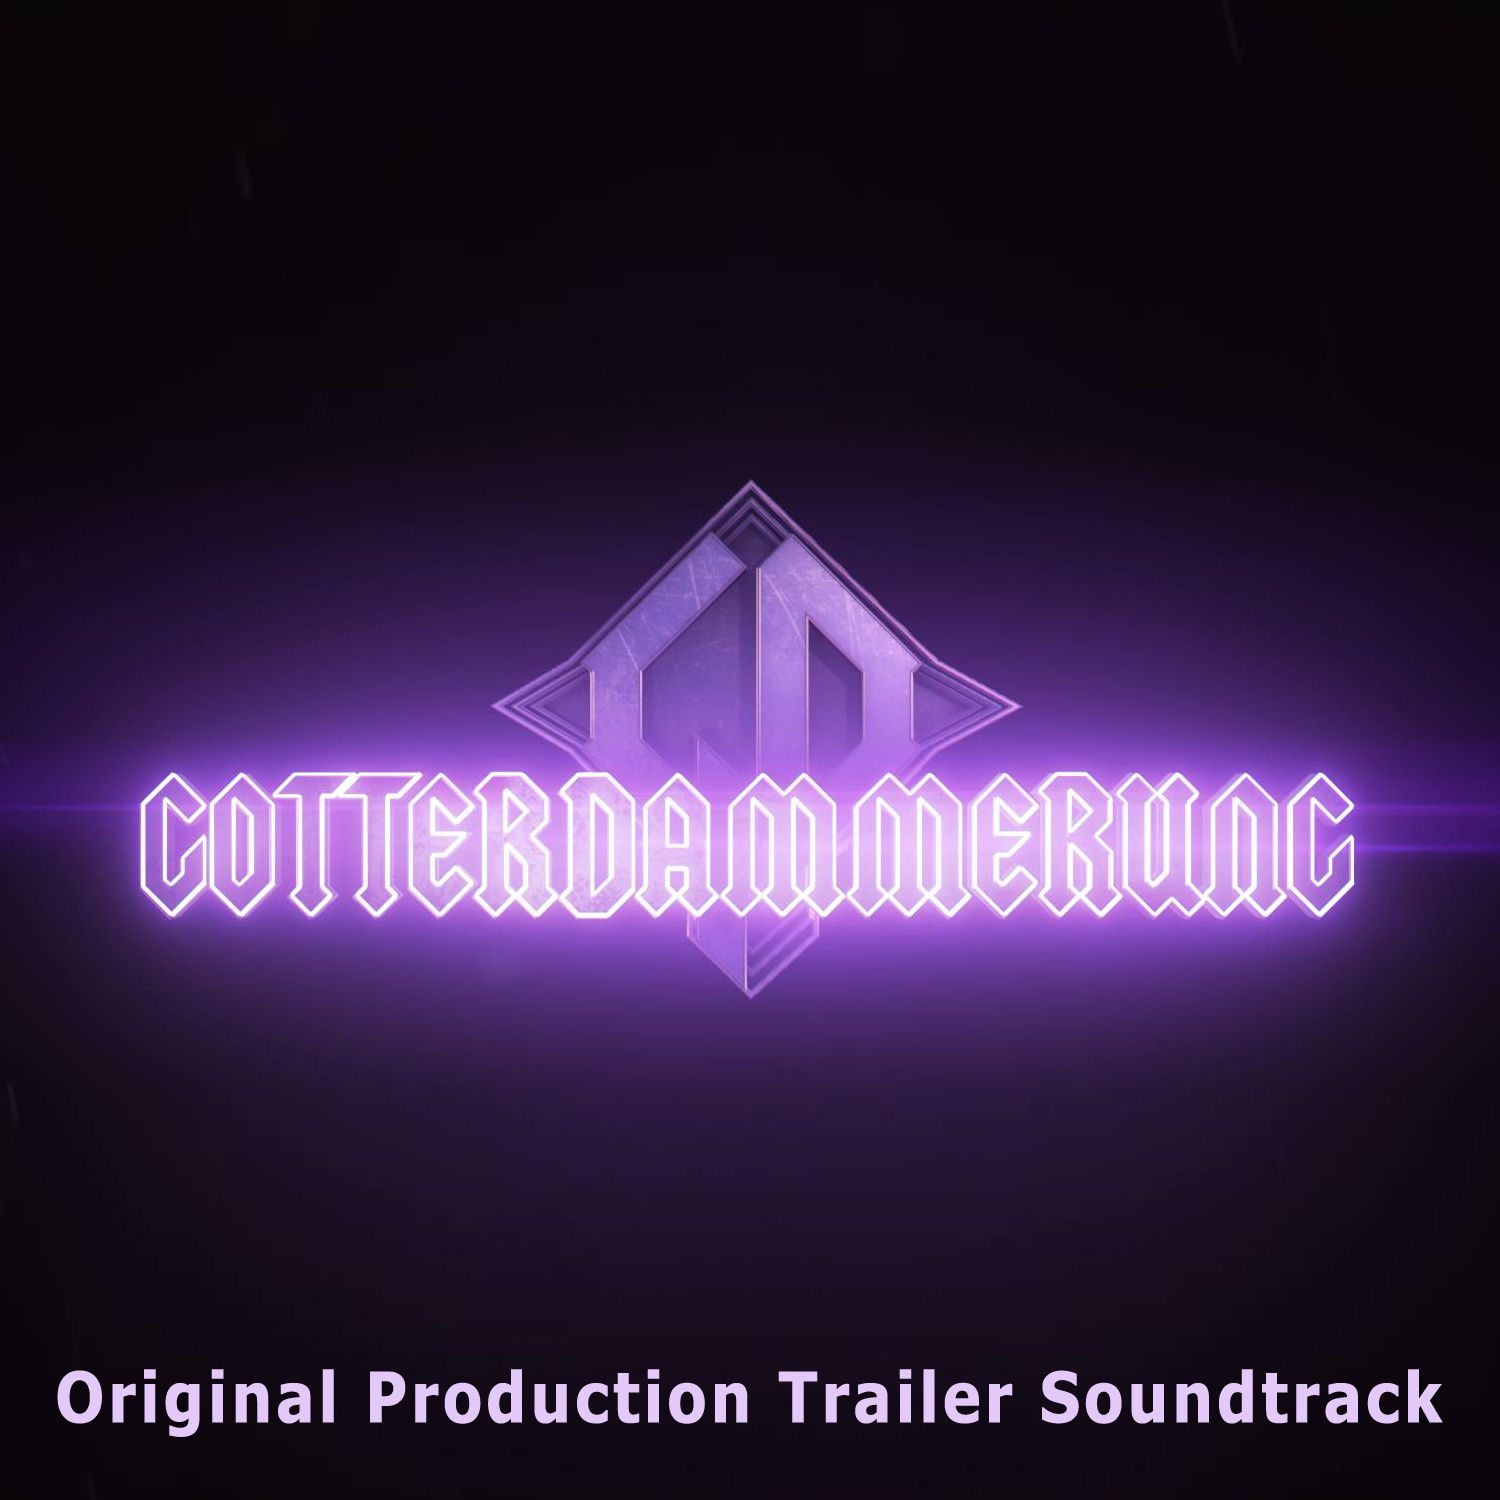 Trailer soundtrack. The Ascent OST. Саундтреки прицеп. Gotterdammerung. House of Caravan Soundtrack.